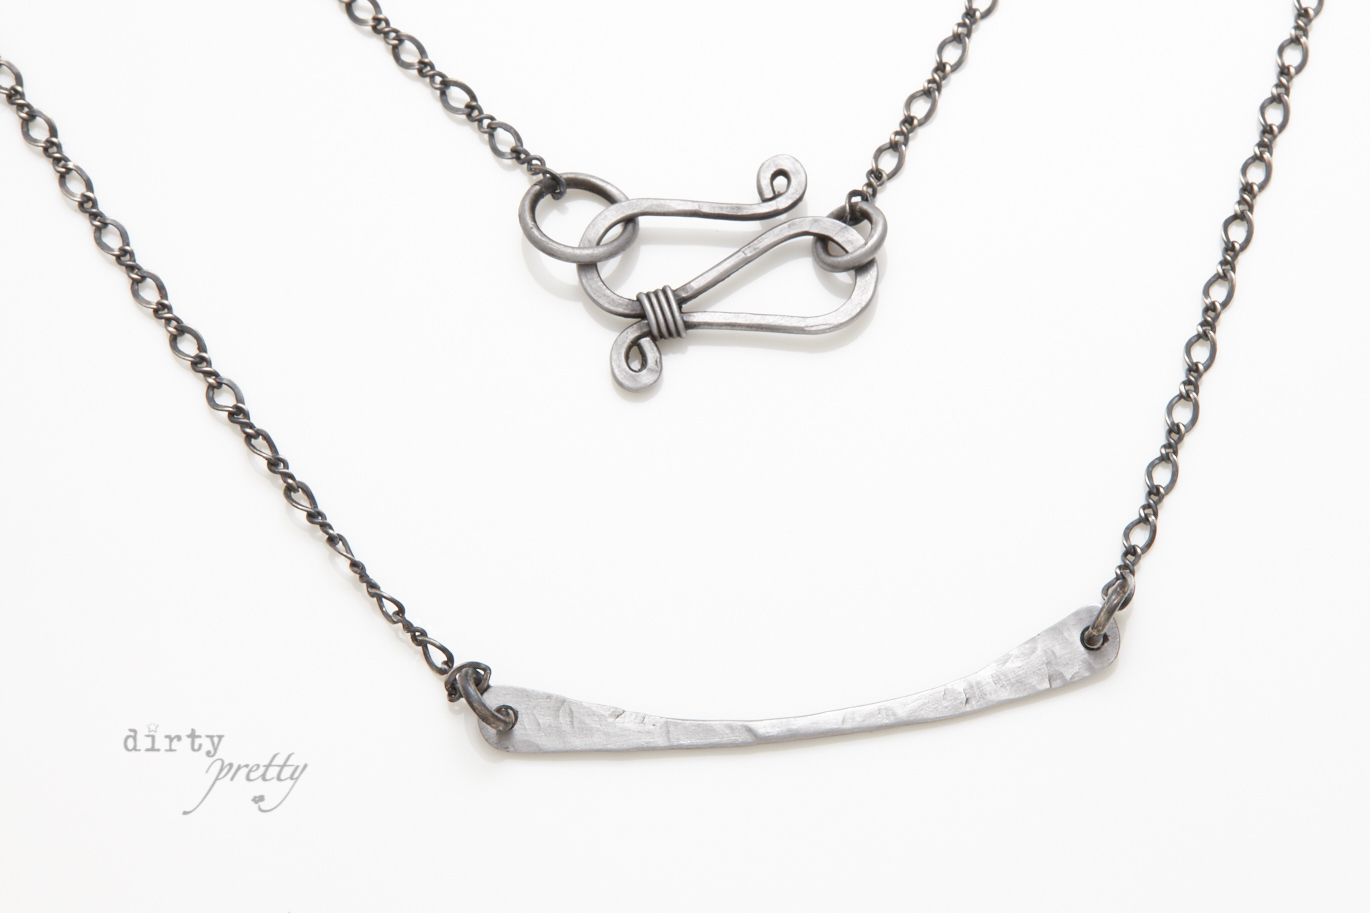 6th wedding anniversary gifts - Simple Chic Necklace - Iron Wedding Anniversary Gifts by dirtypretty artwear